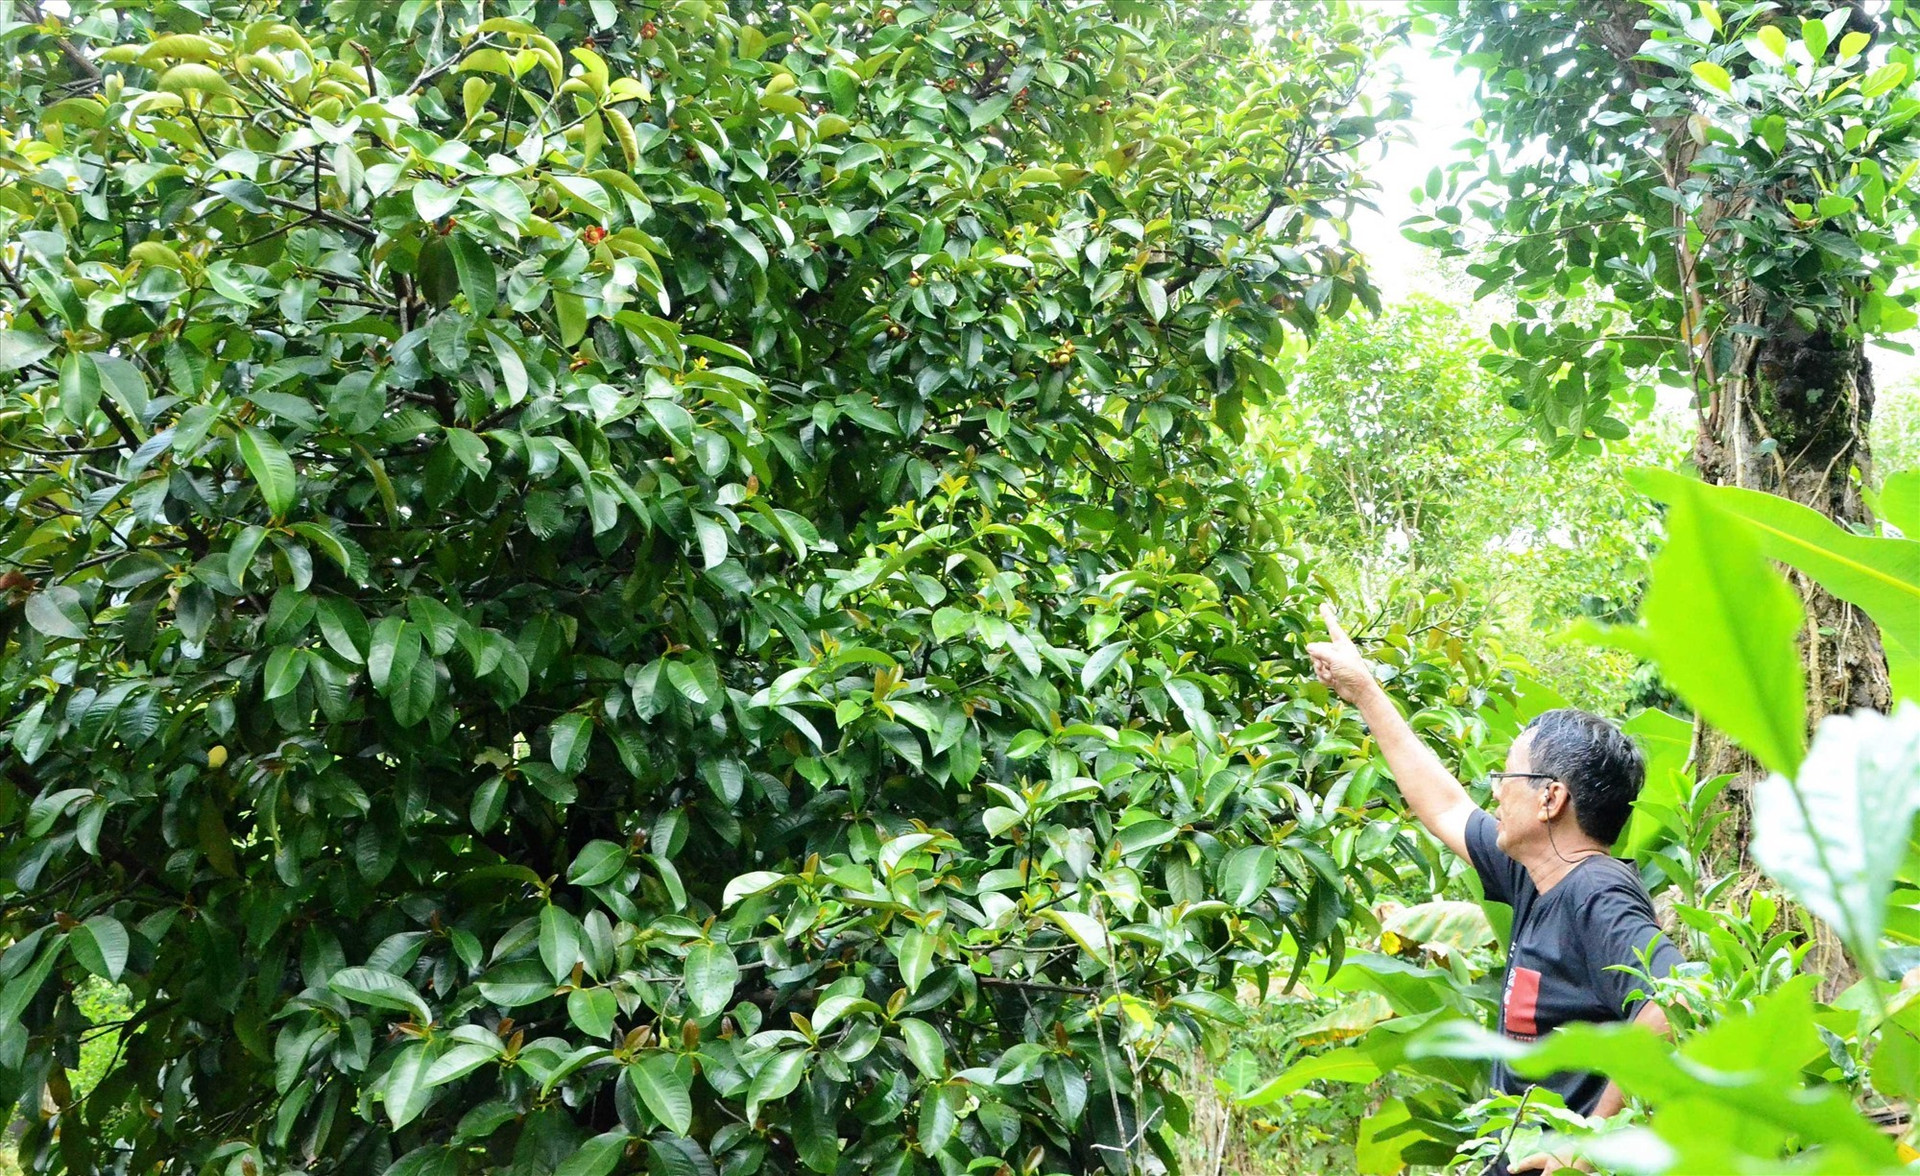 Loc Yen villagers harvest mangosteen.